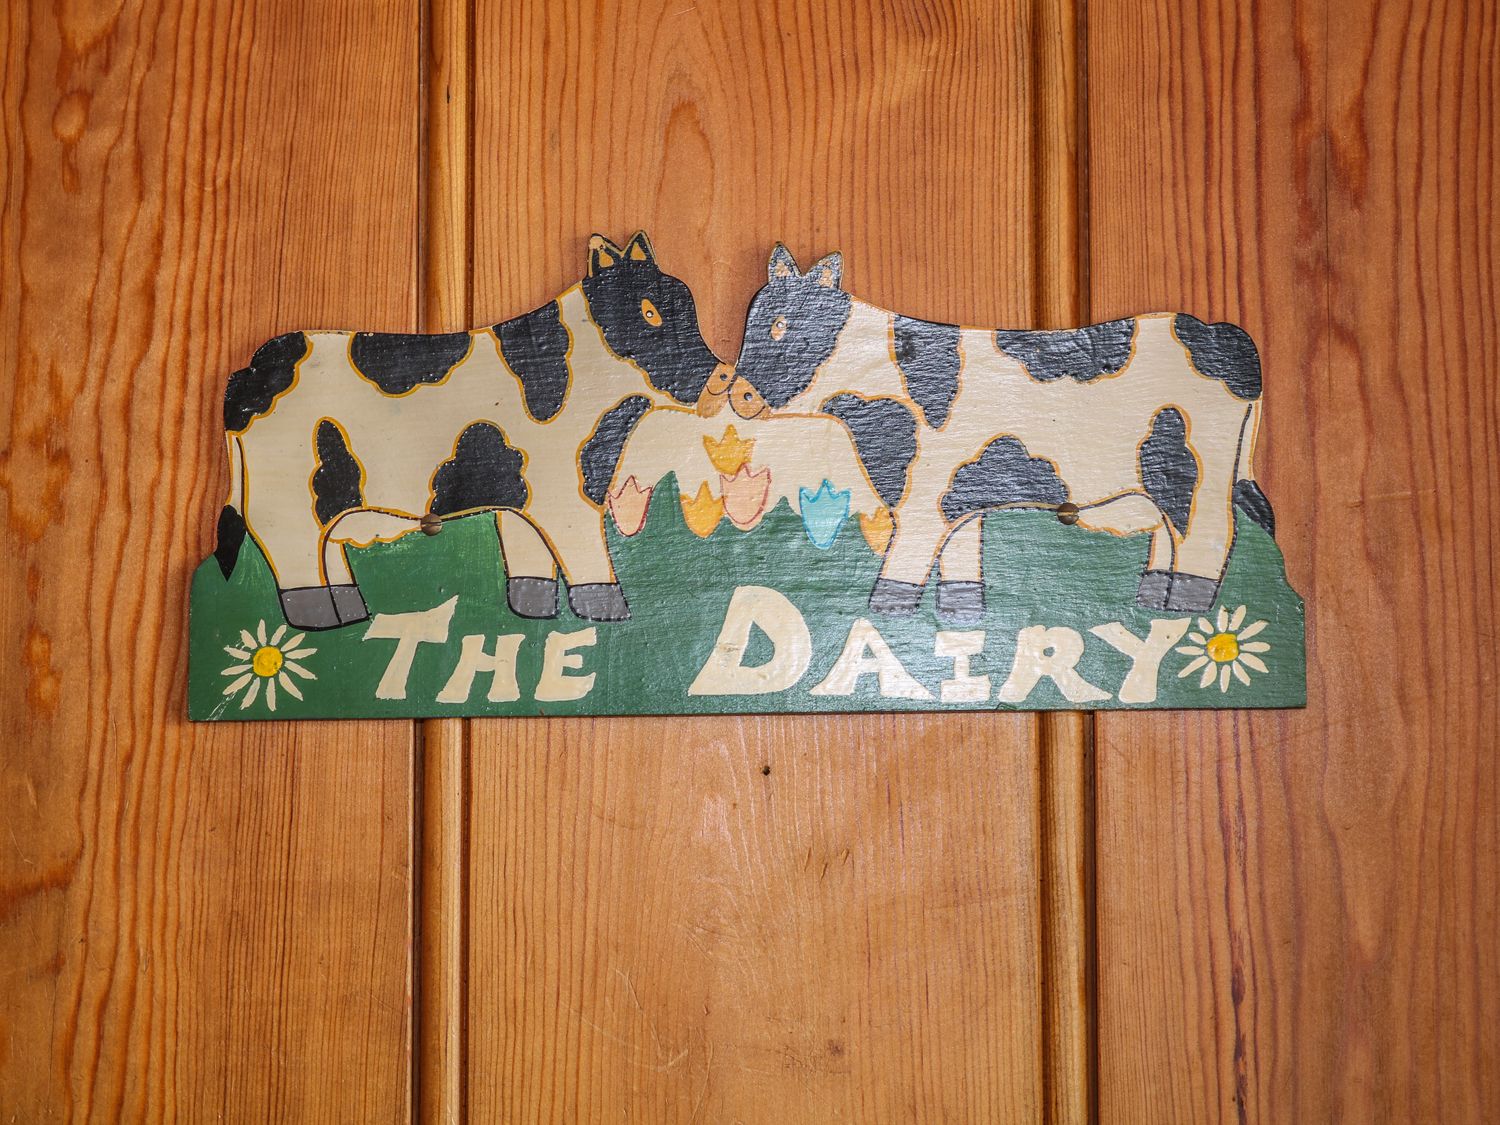 The Dairy, Peak District